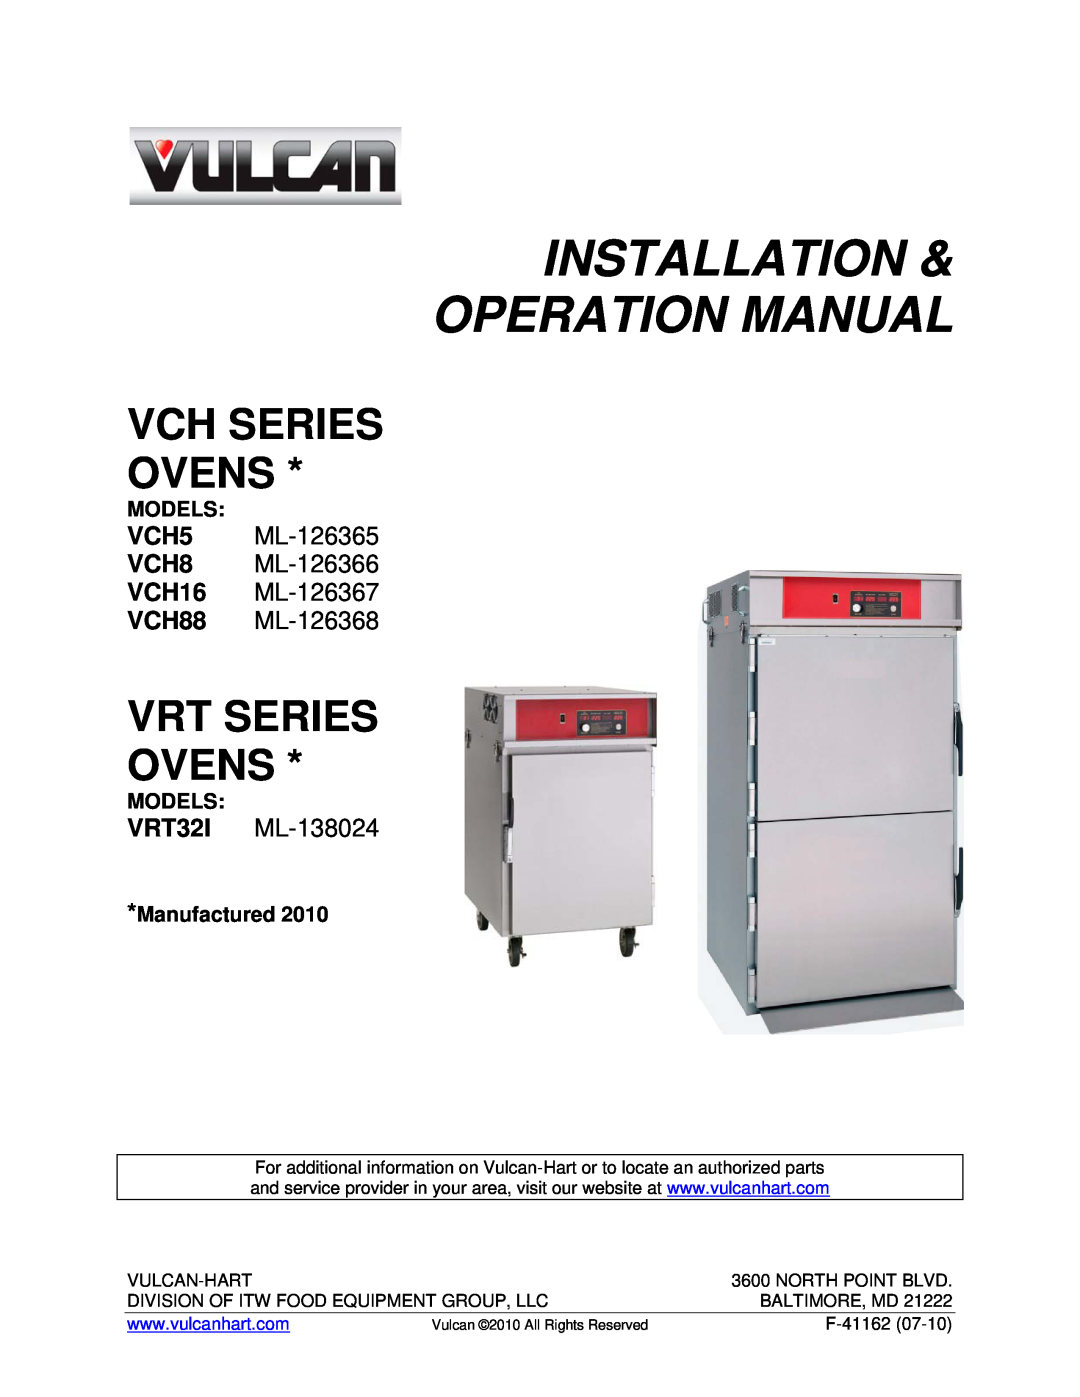 Vulcan-Hart VRT SERIES operation manual Installation & Operation Manual, Vch Series Ovens, Vrt Series Ovens, Models 